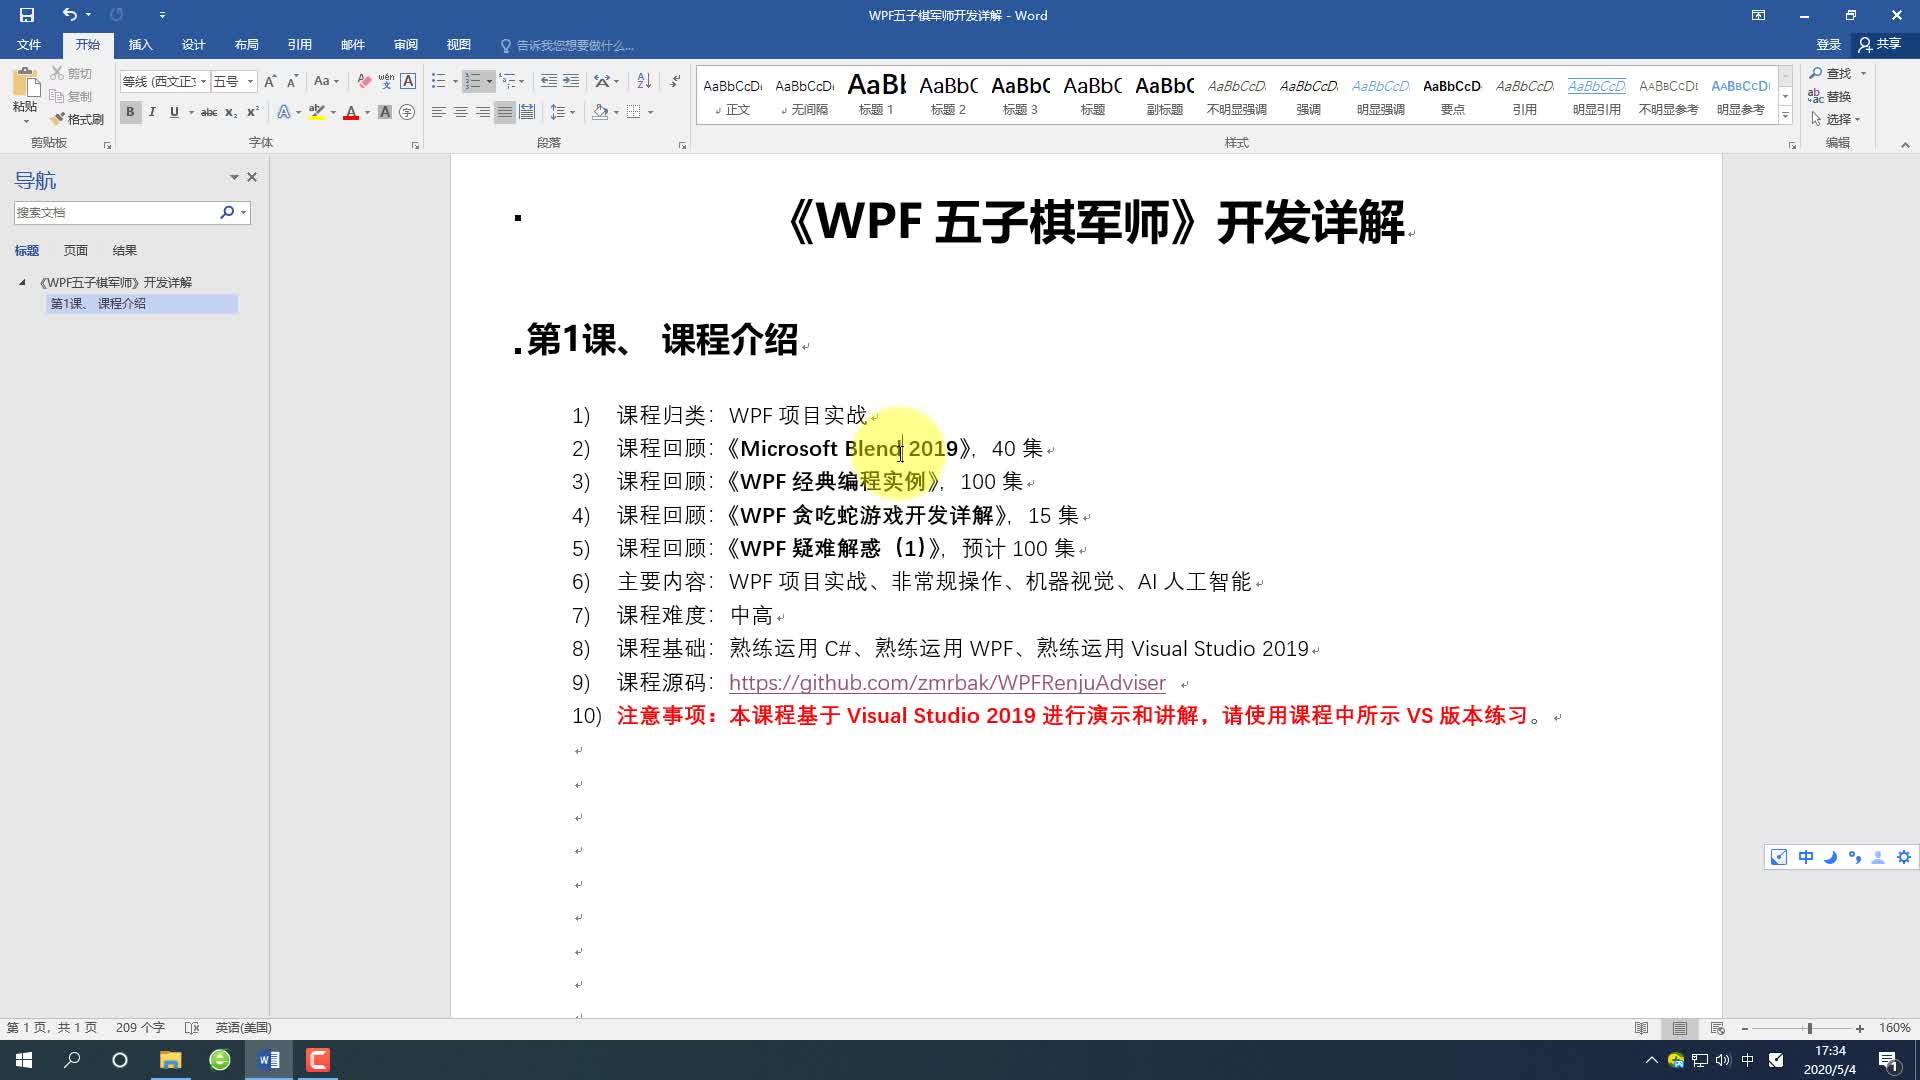 WPF五子棋军师开发详解/MVVM/C#/WebApi/人工智能/机器视觉